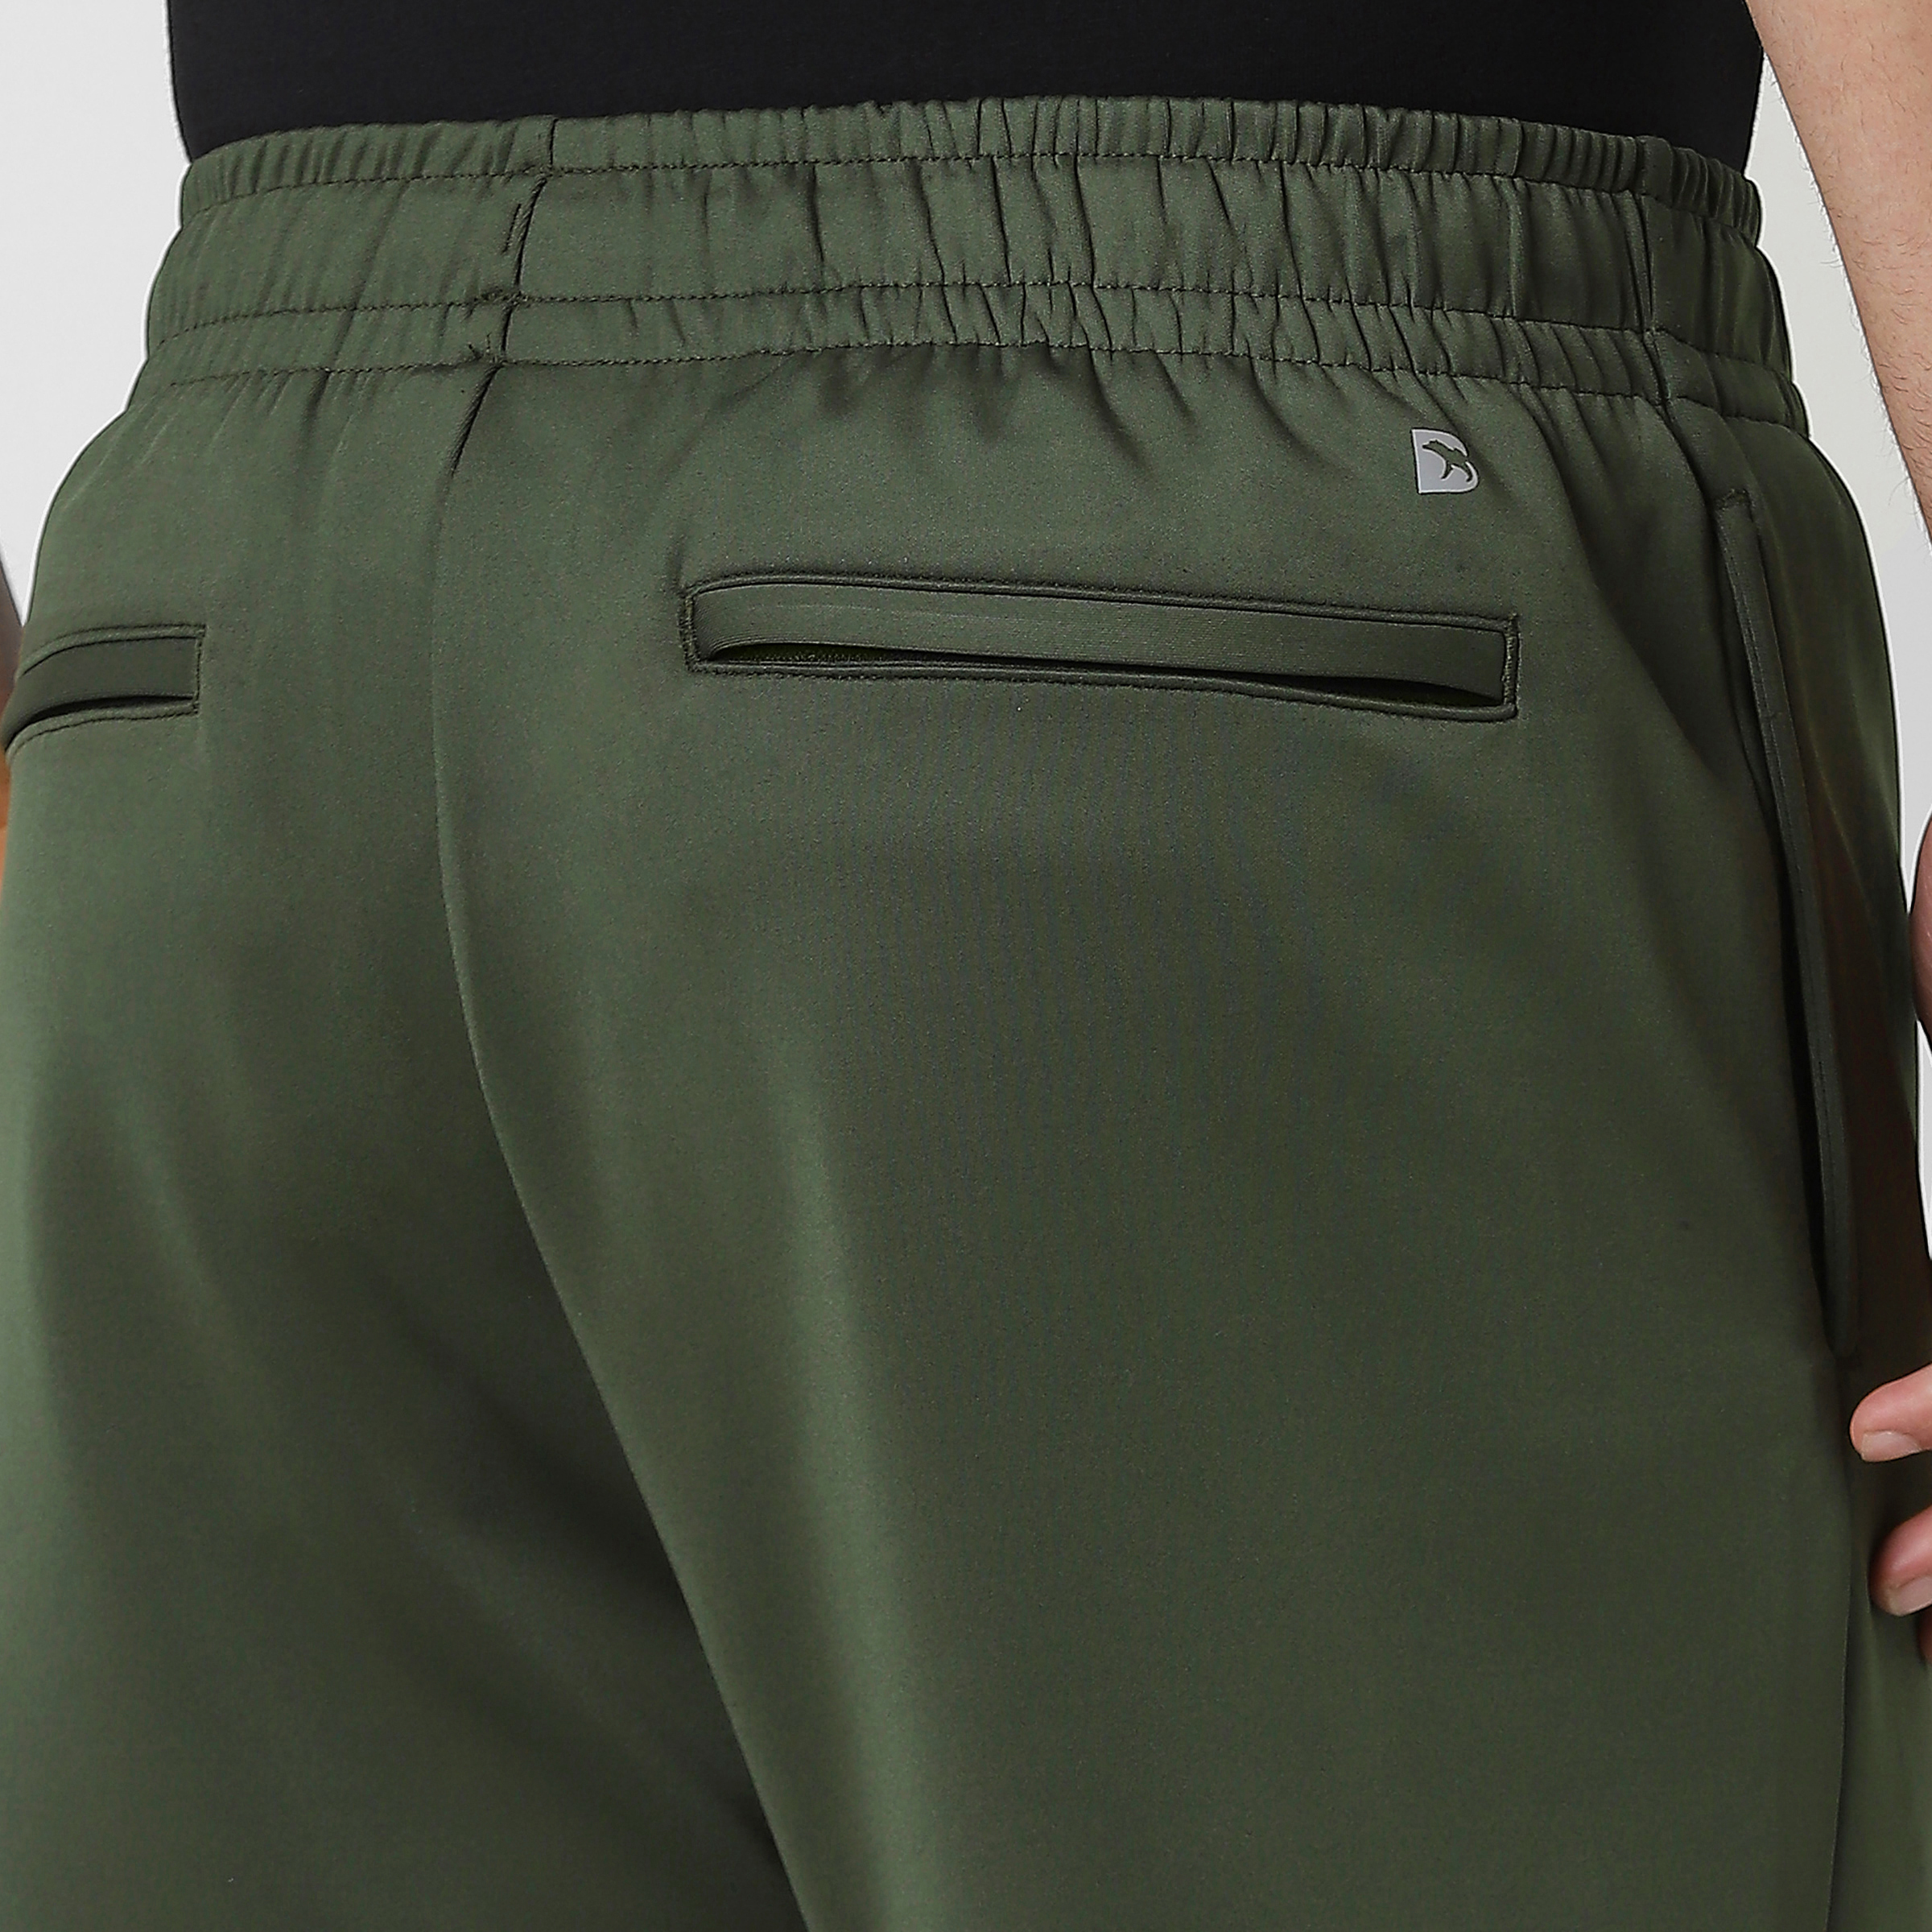 Scuba Short Military Green close up back zipper pocket on model